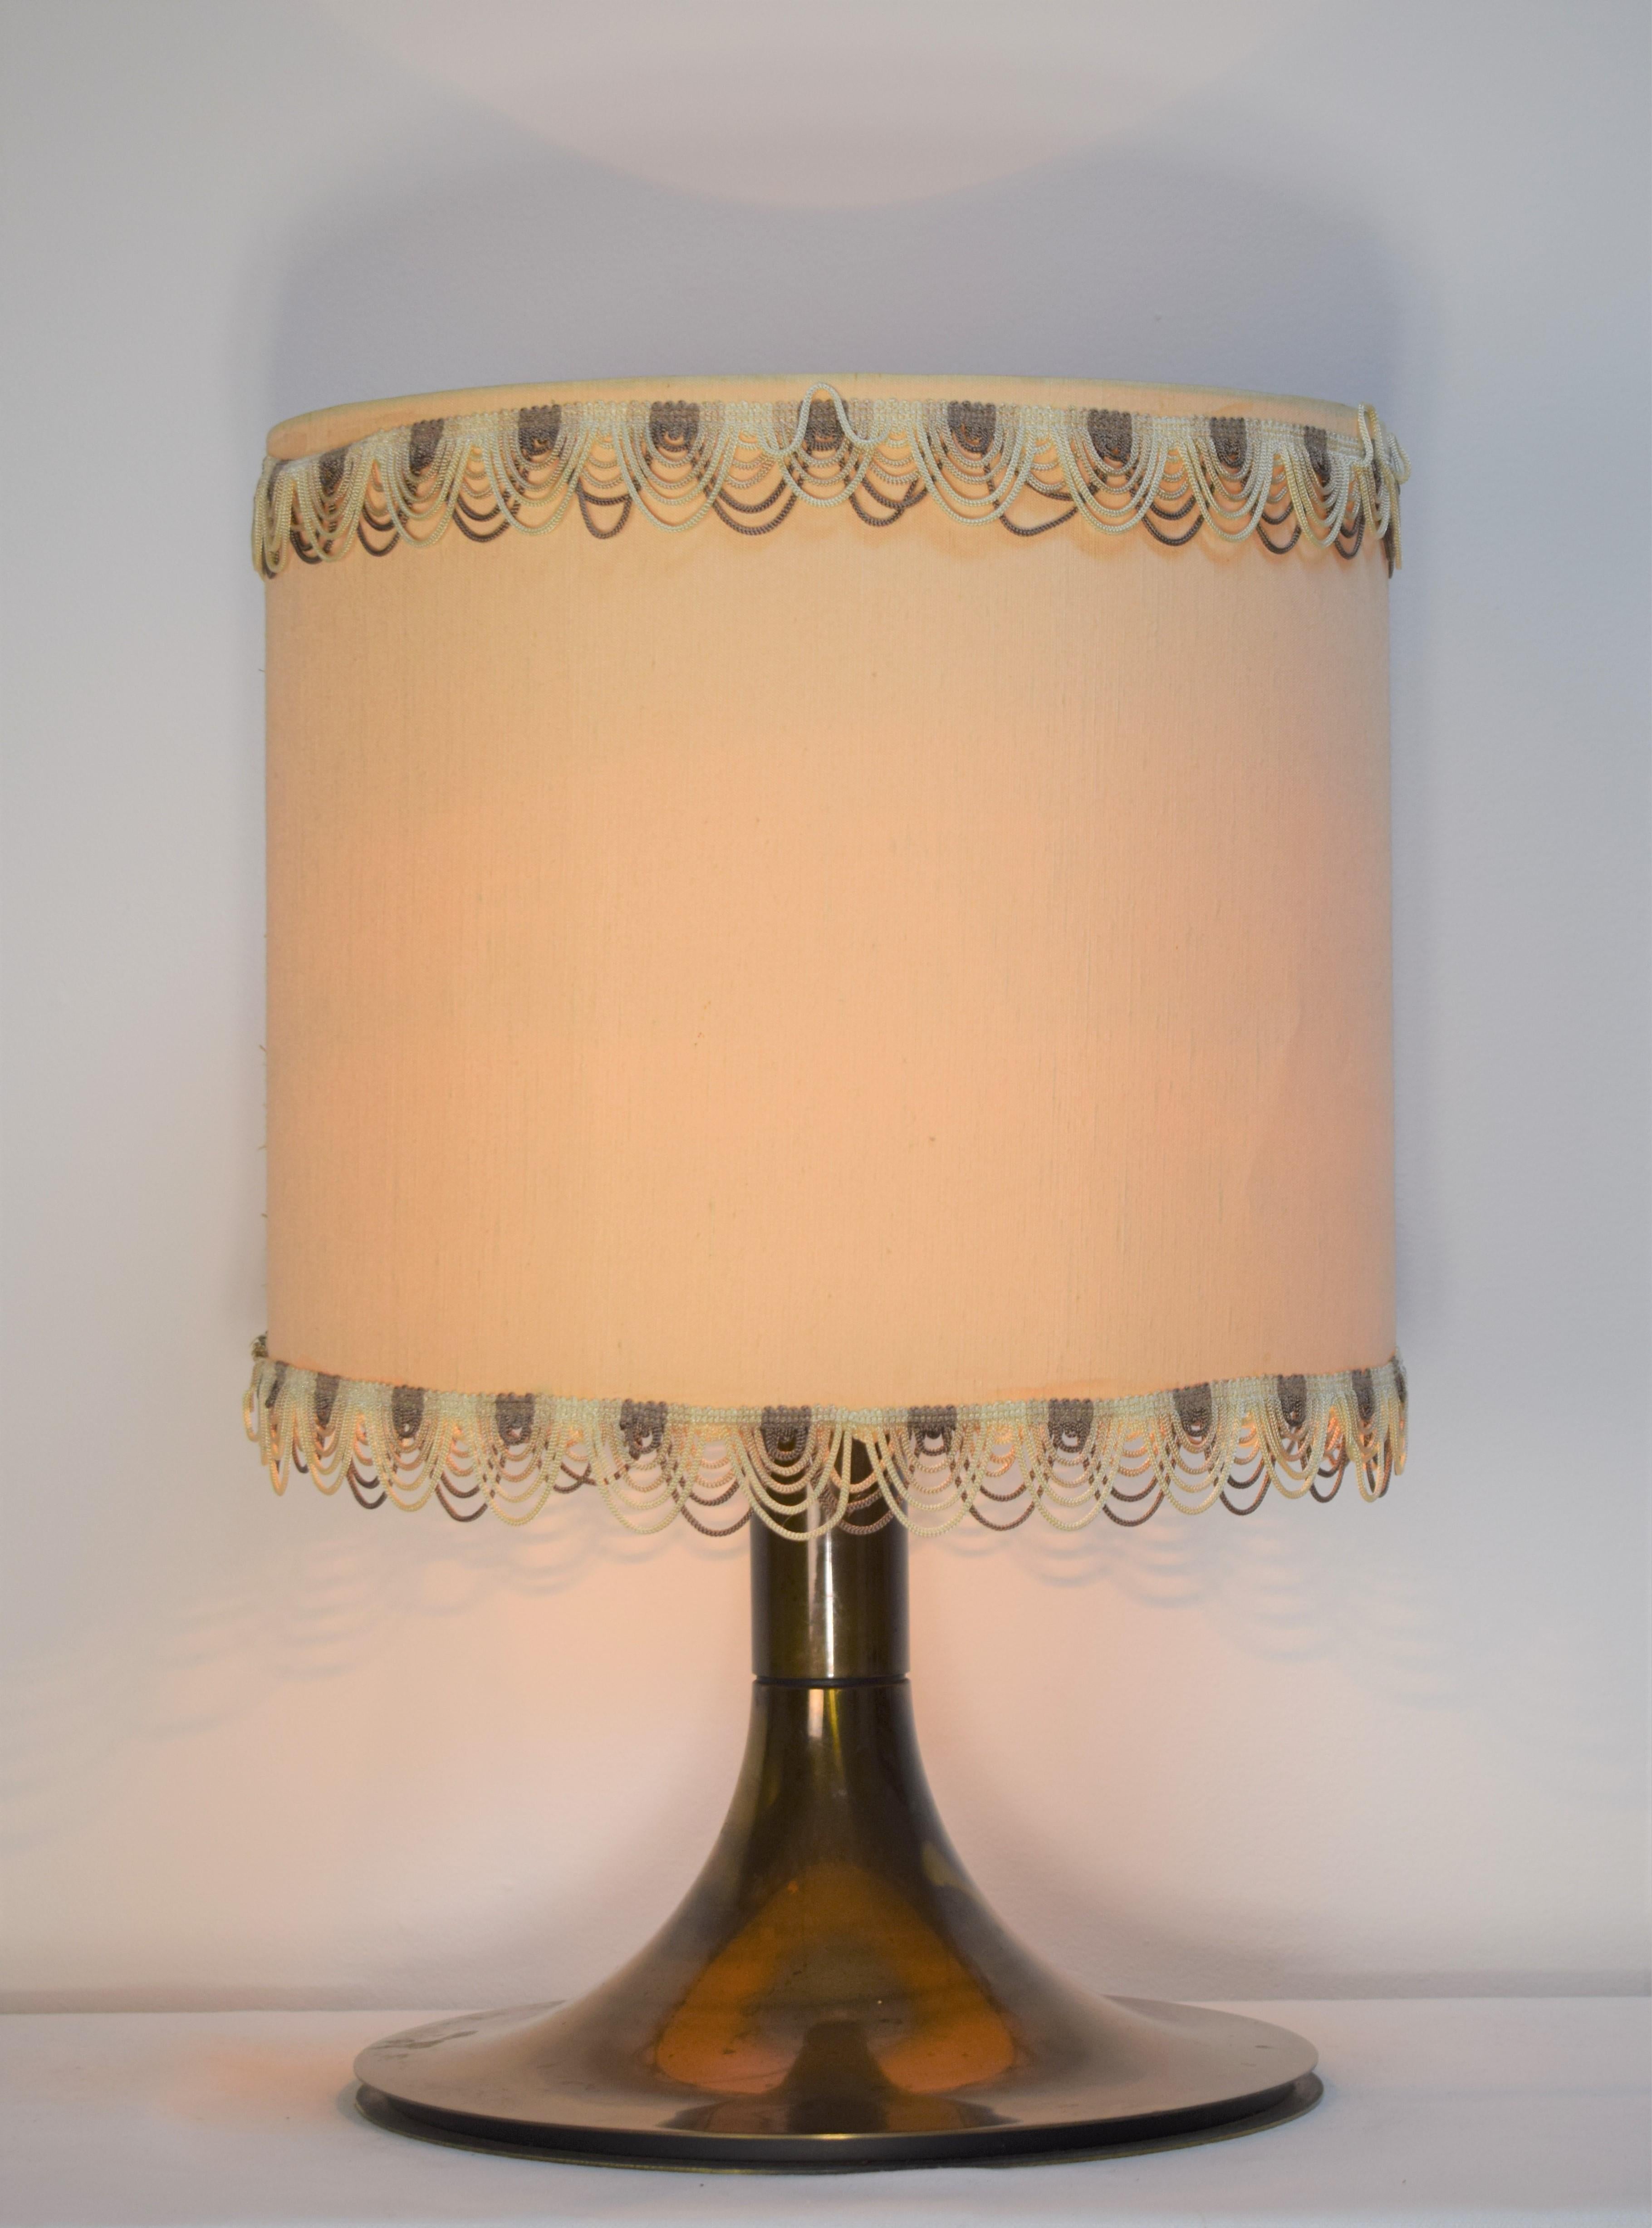 Italian brass table lamp, 1960s.

Dimensions: H= 50 cm; D=35cm.